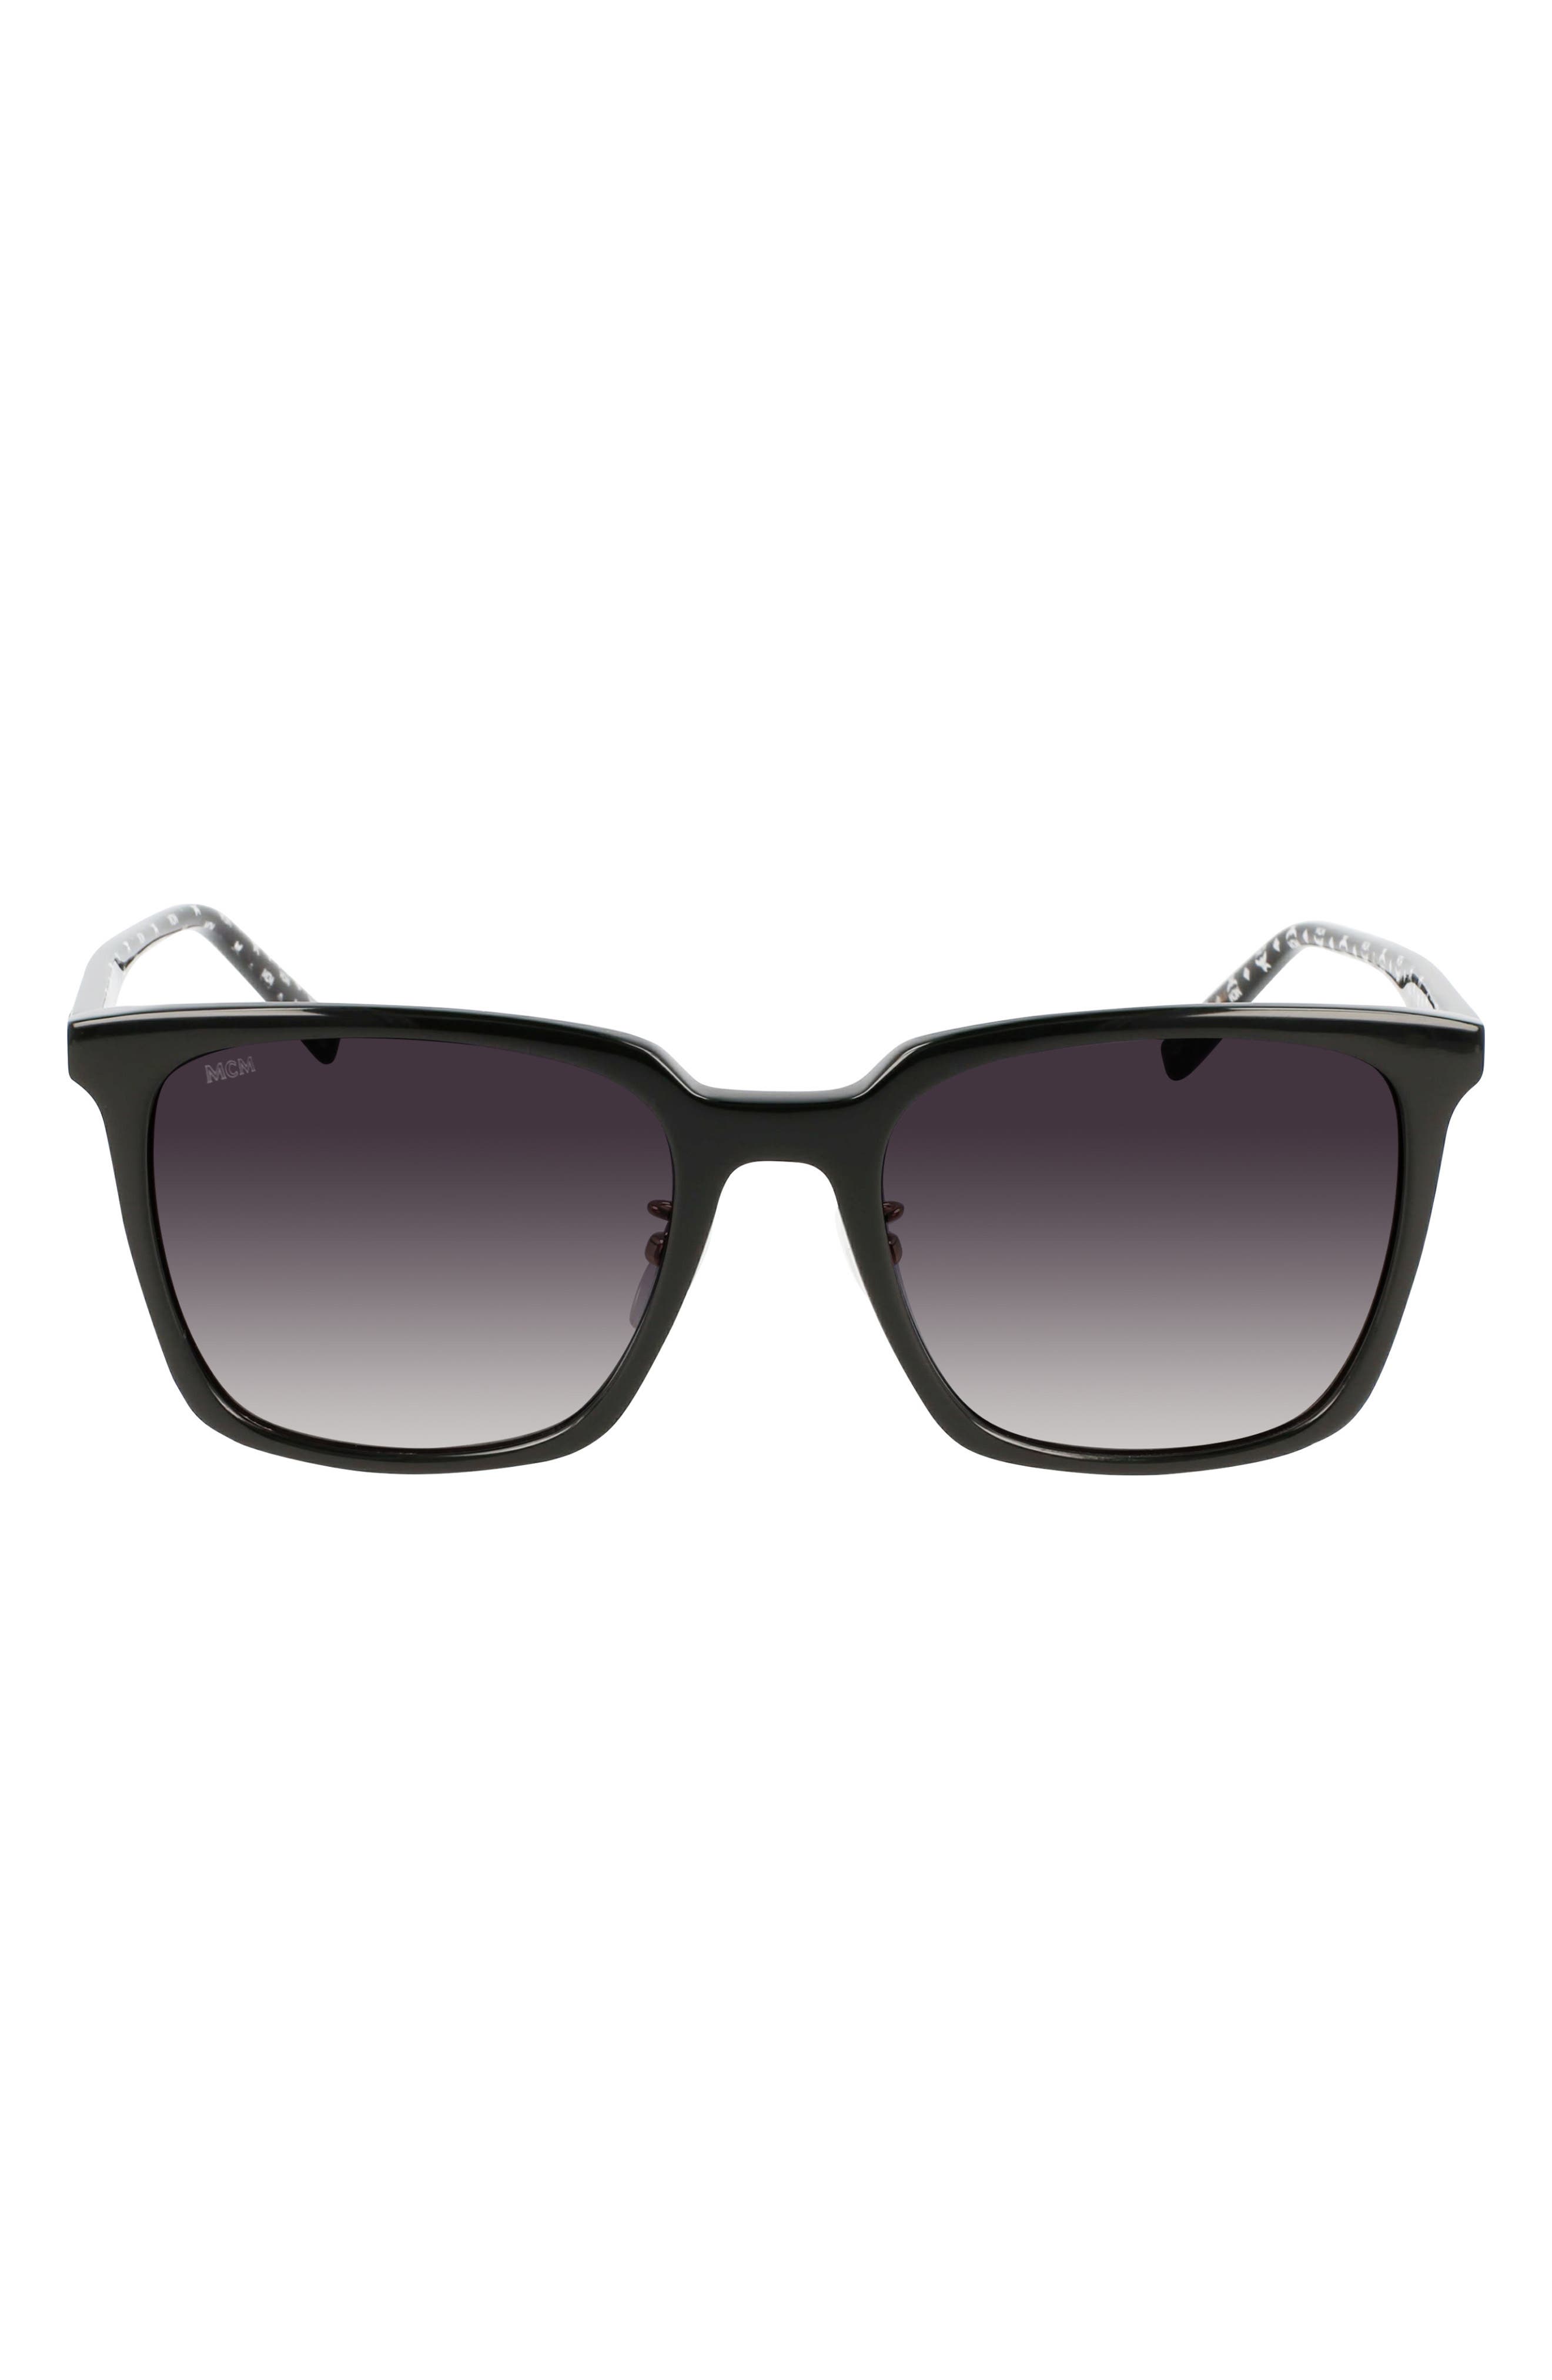 MCM 56mm Rectangular Sunglasses in Black at Nordstrom